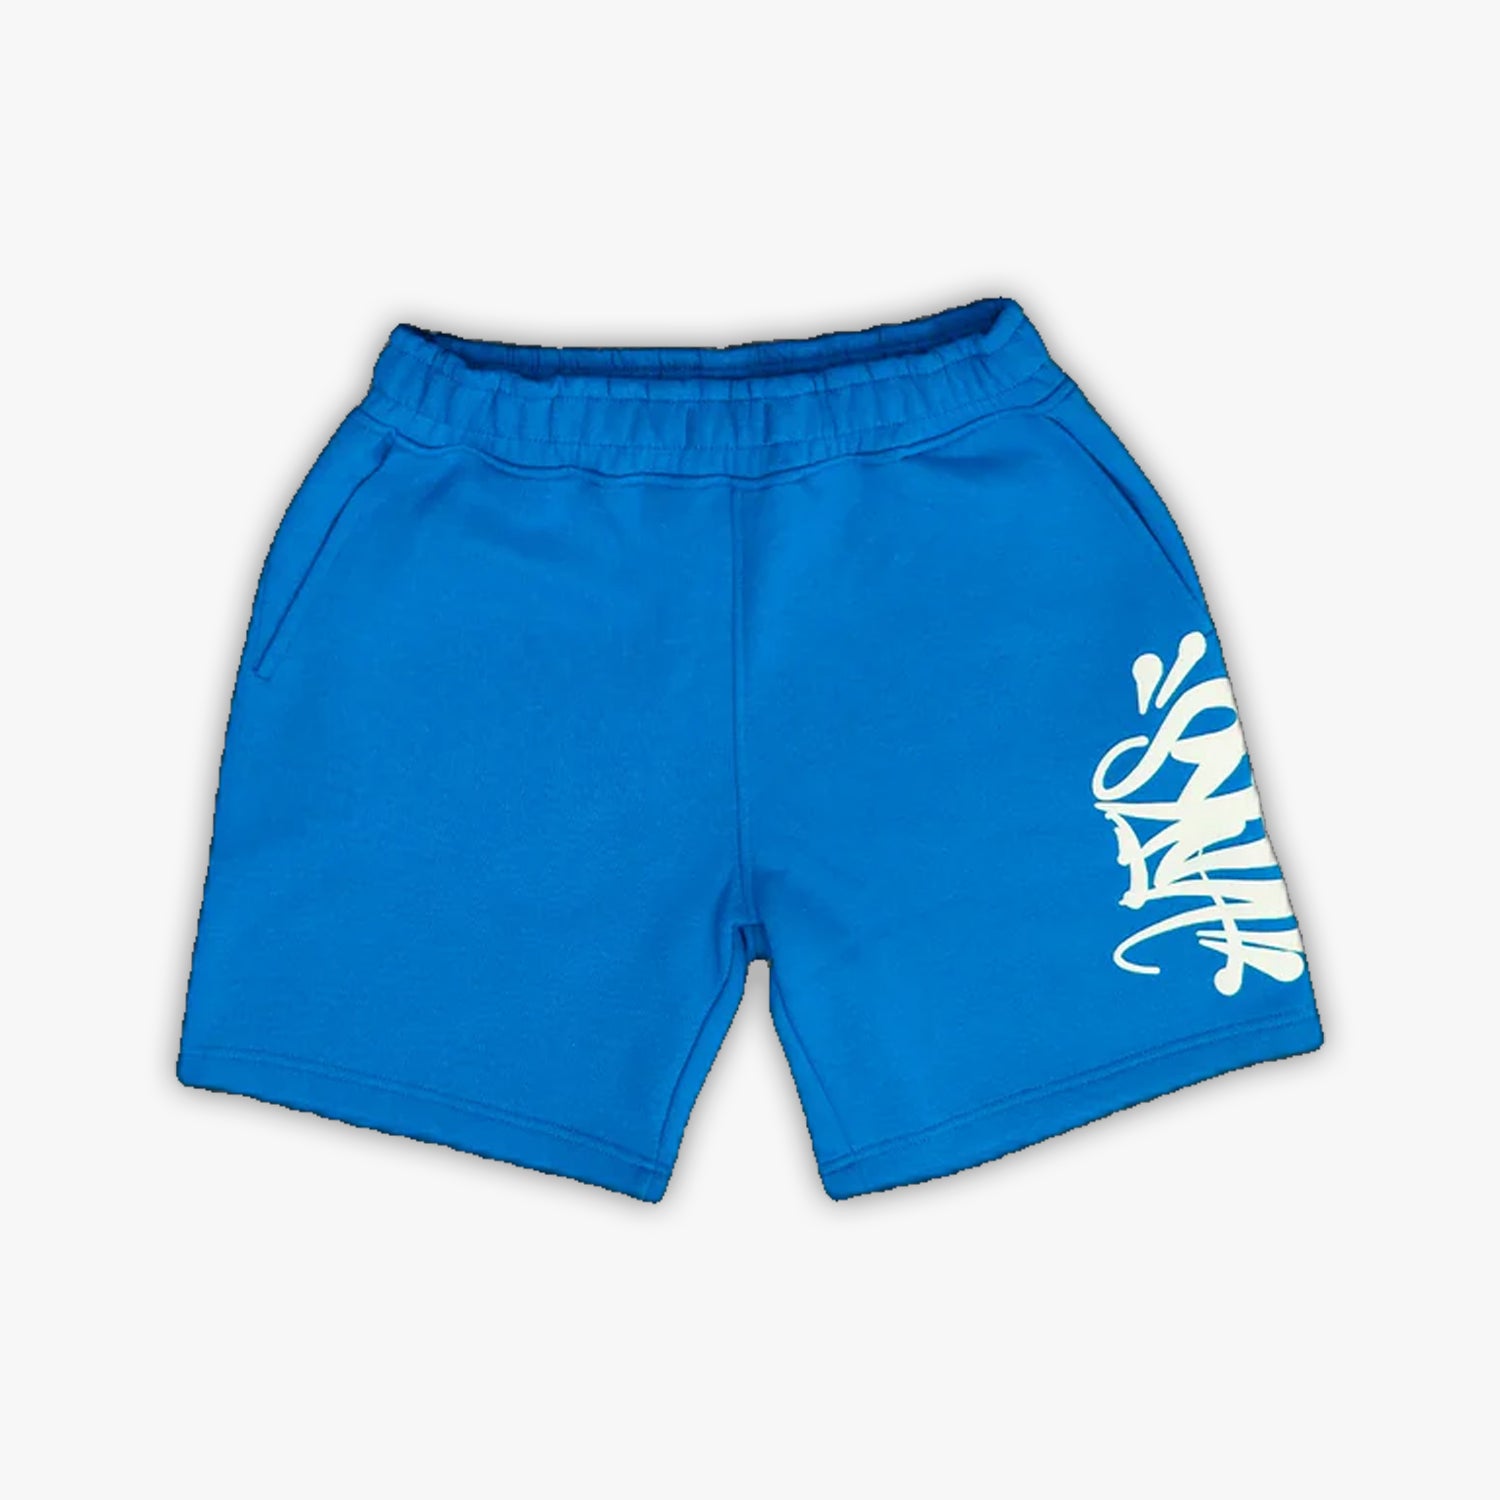 Syna World Team T-Shirt & Shorts Logo Set - Blue / White